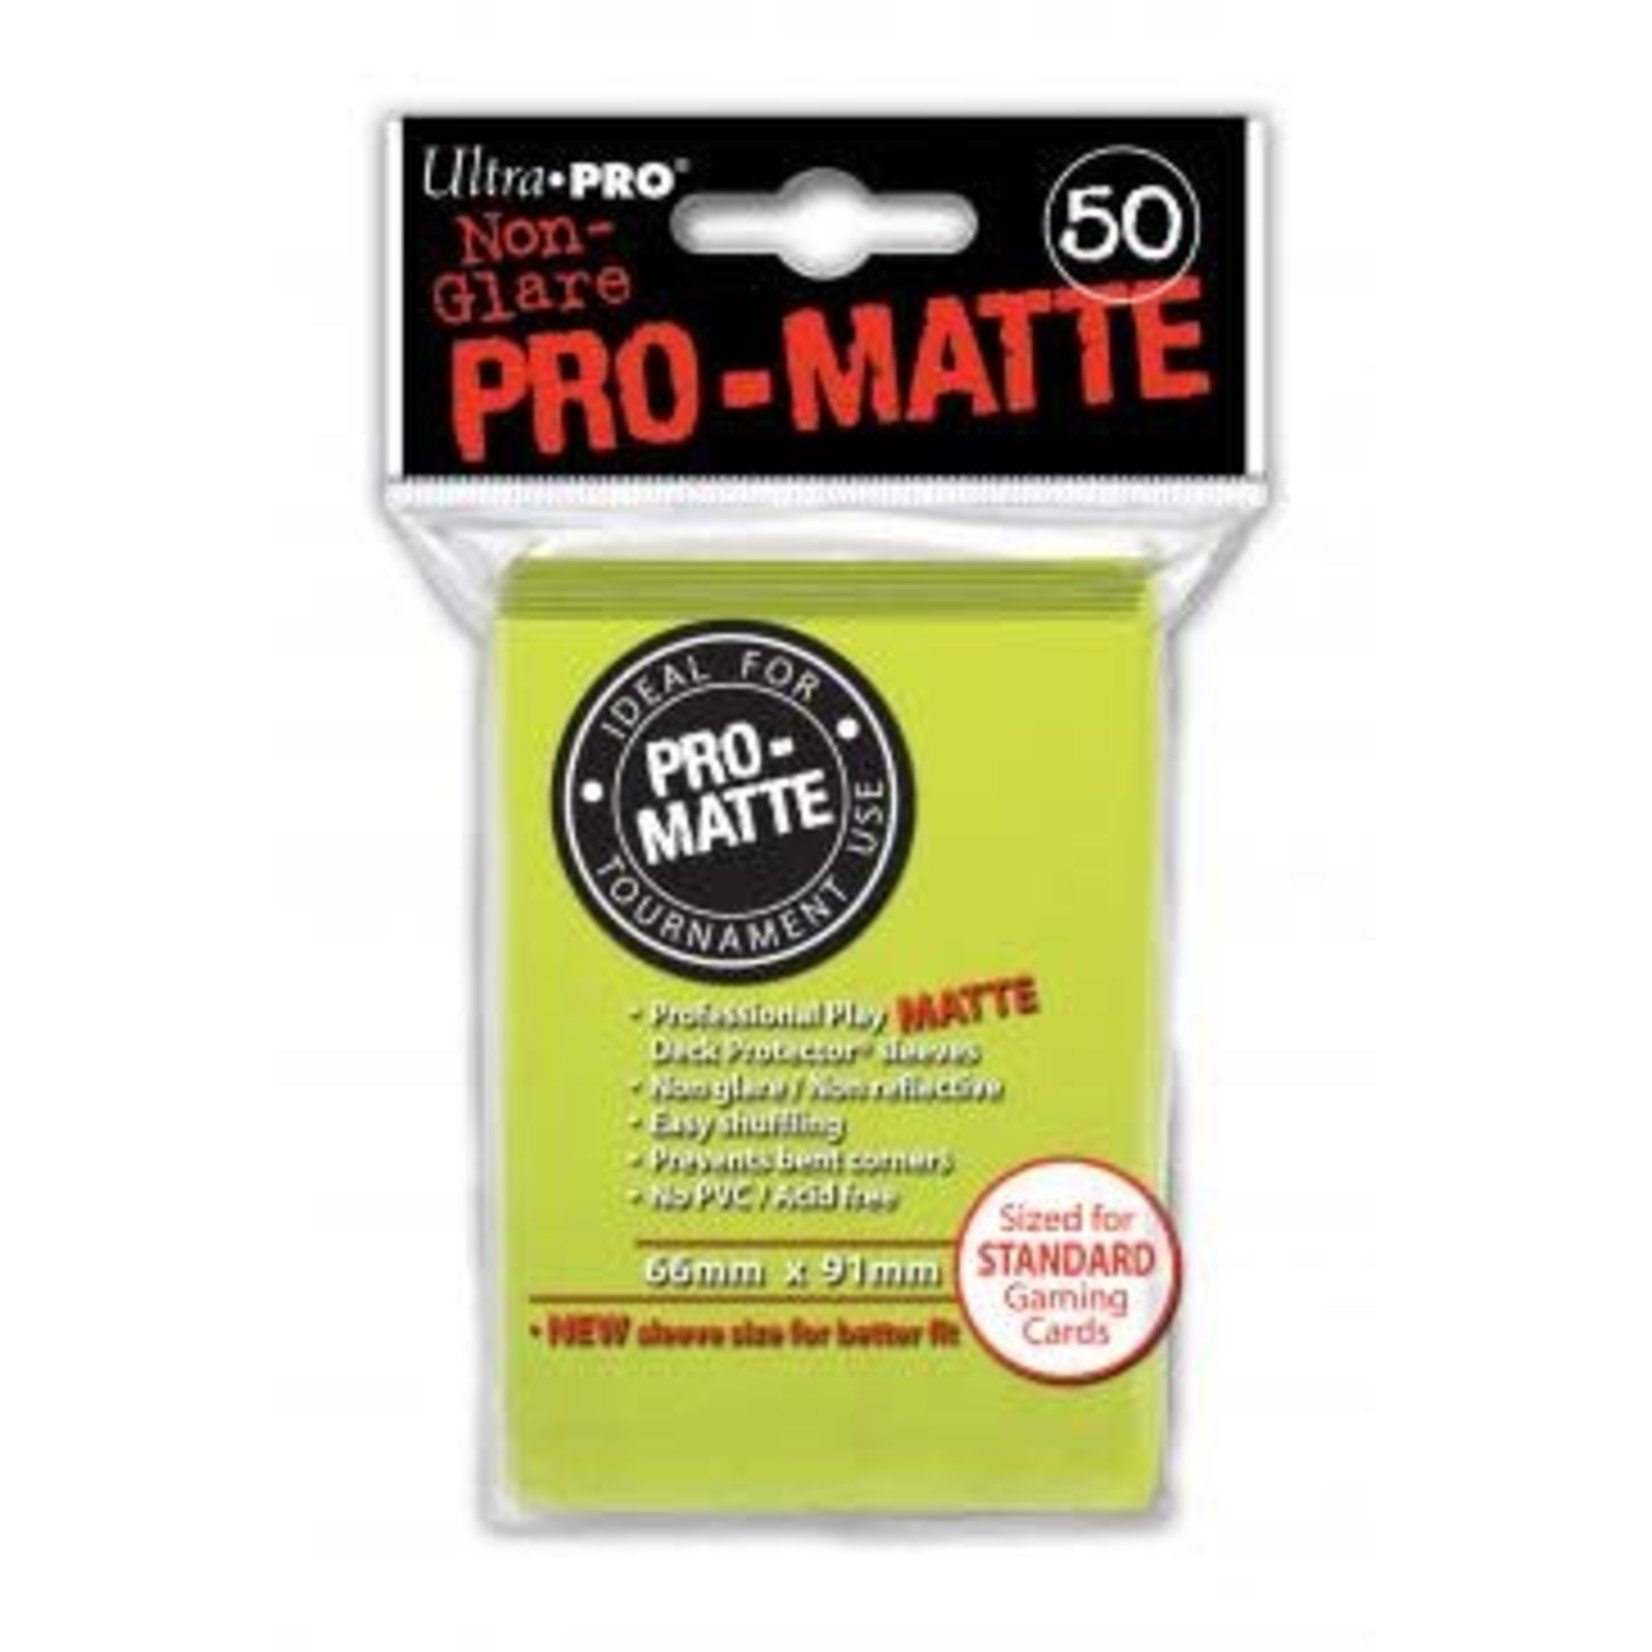 Ultra Pro Pro-Matte Bright Yellow Deck Protectors 50ct